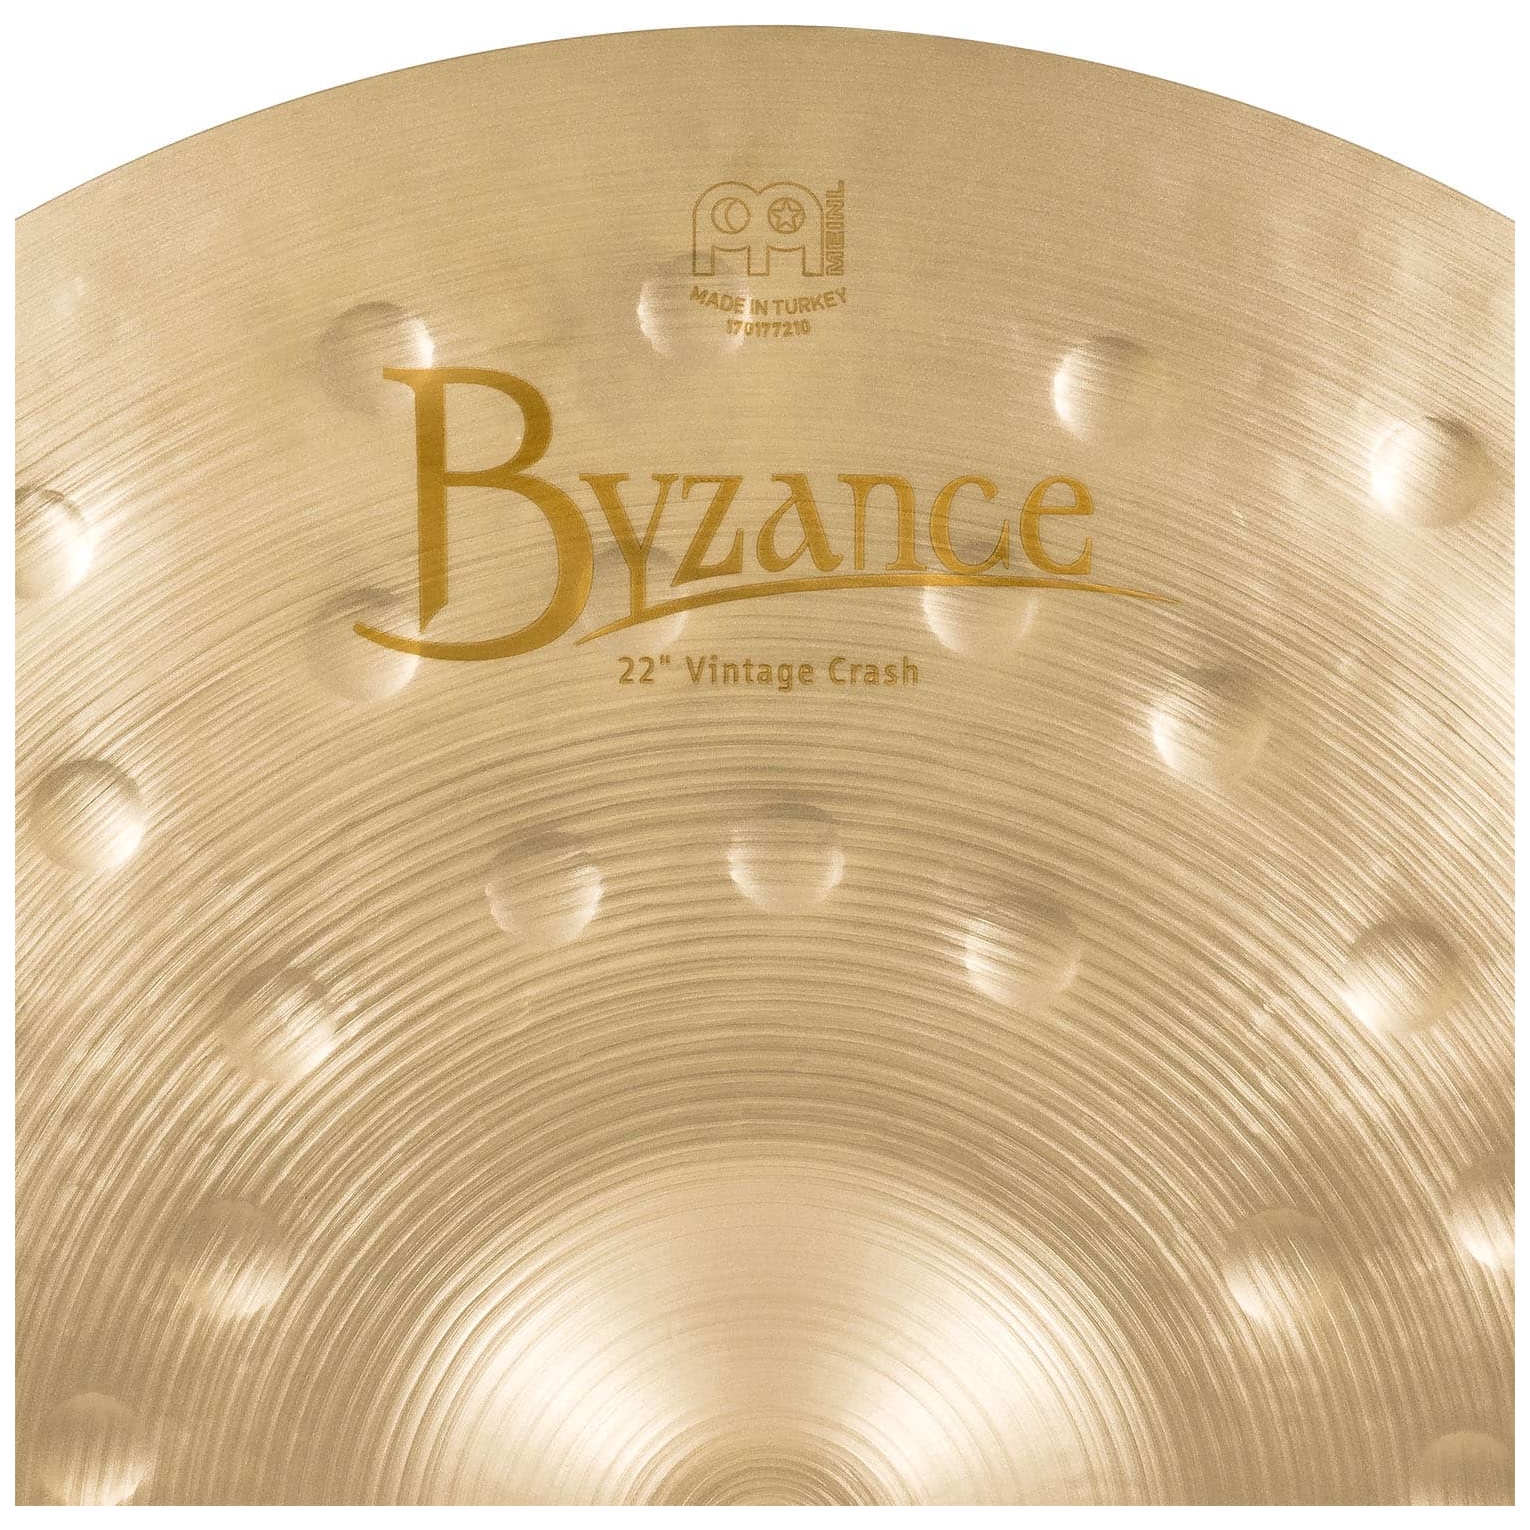 Meinl Cymbals B22VC - 22" Byzance Vintage Crash 